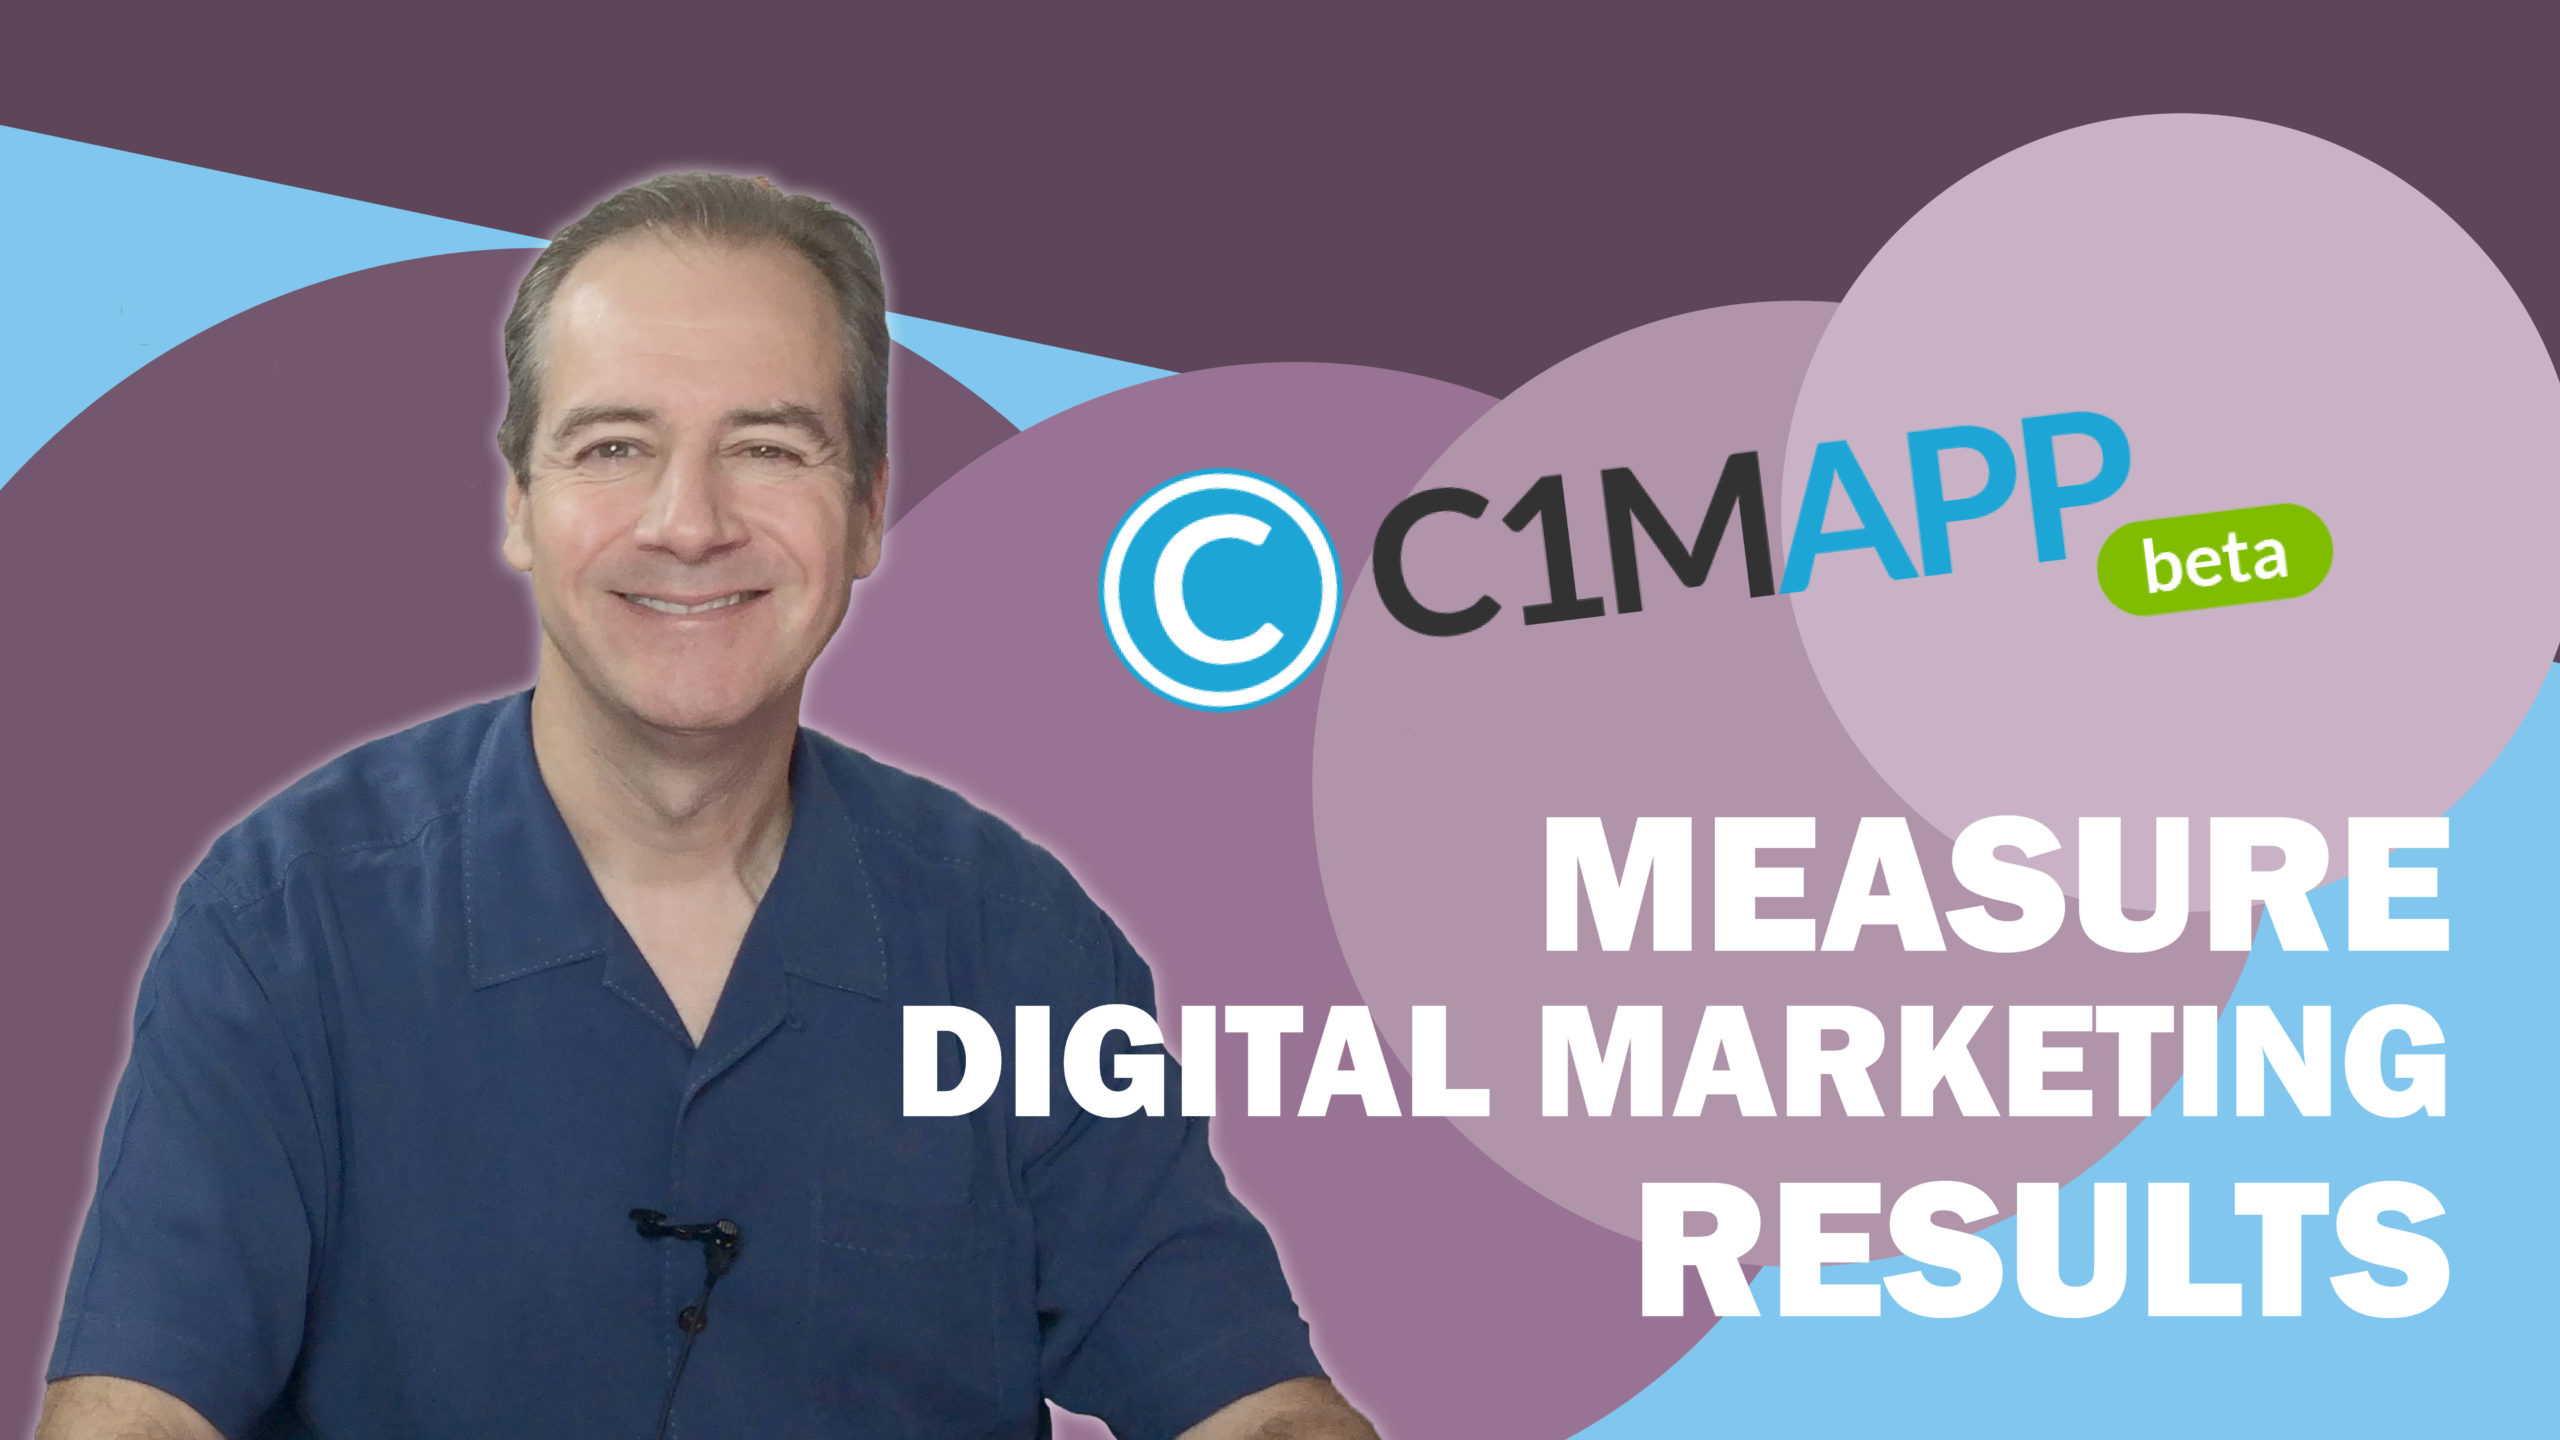 The C1M app – Measure Digital Marketing Results